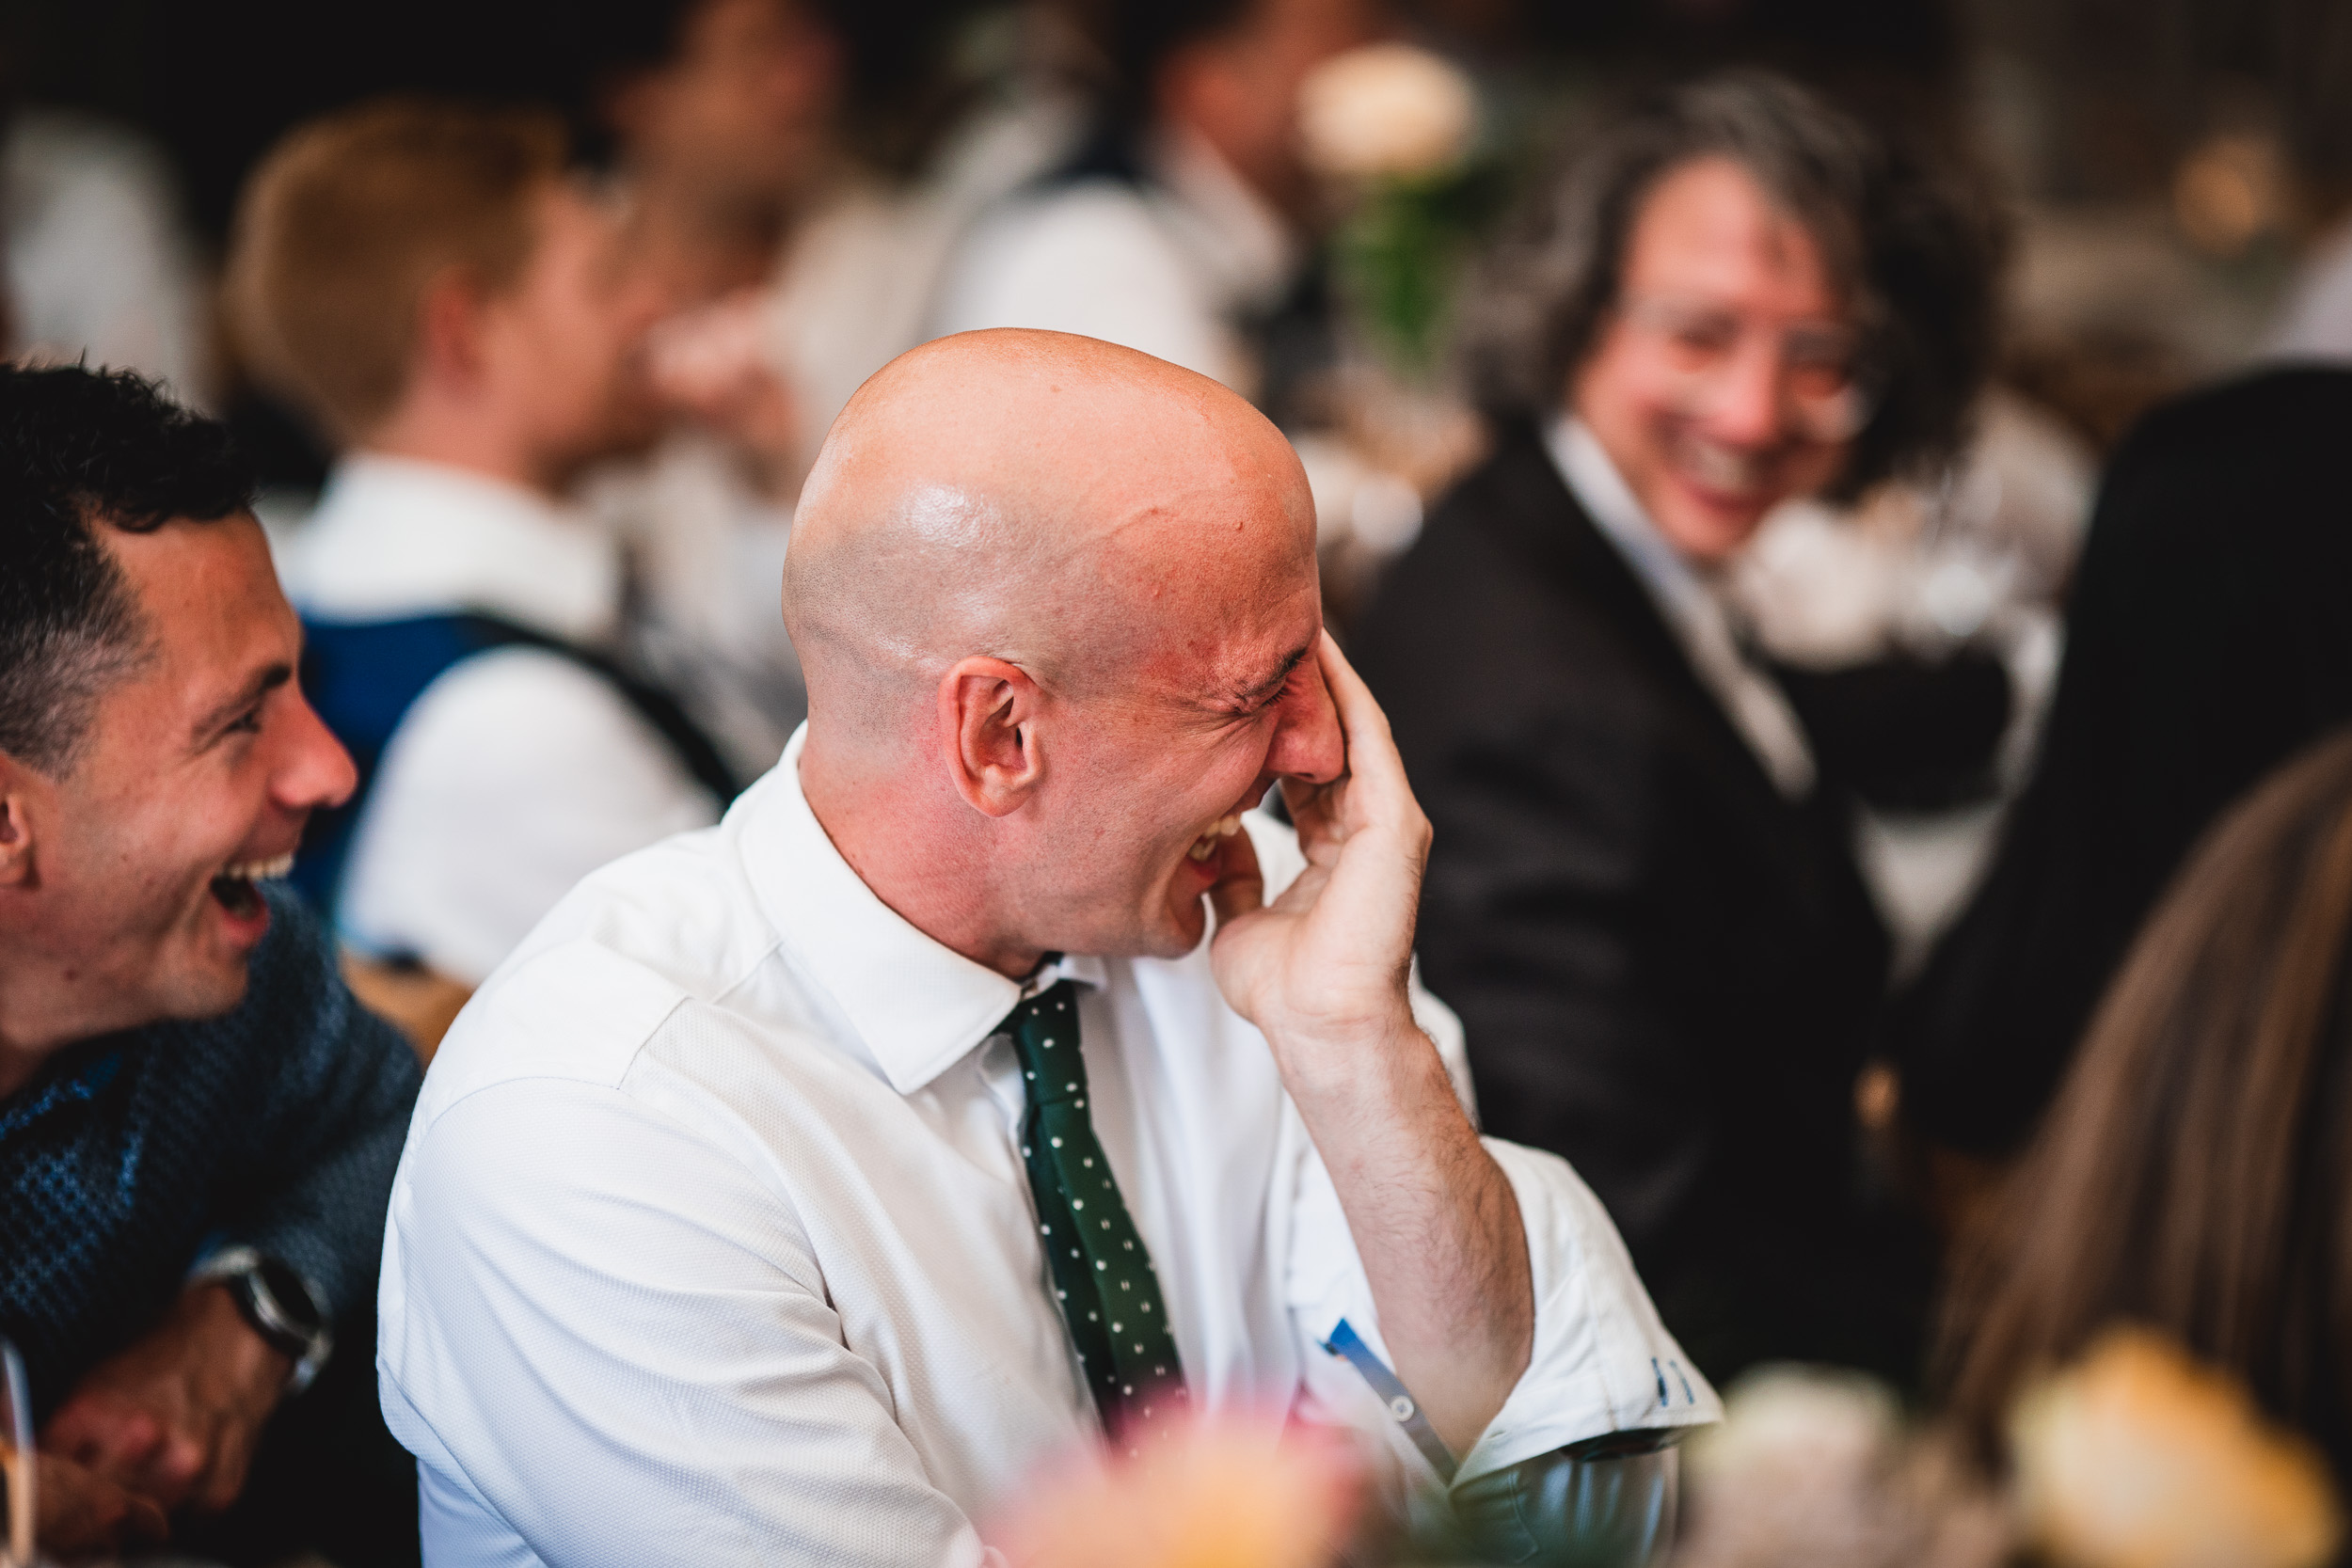 A man laughing at a Surrey wedding reception.